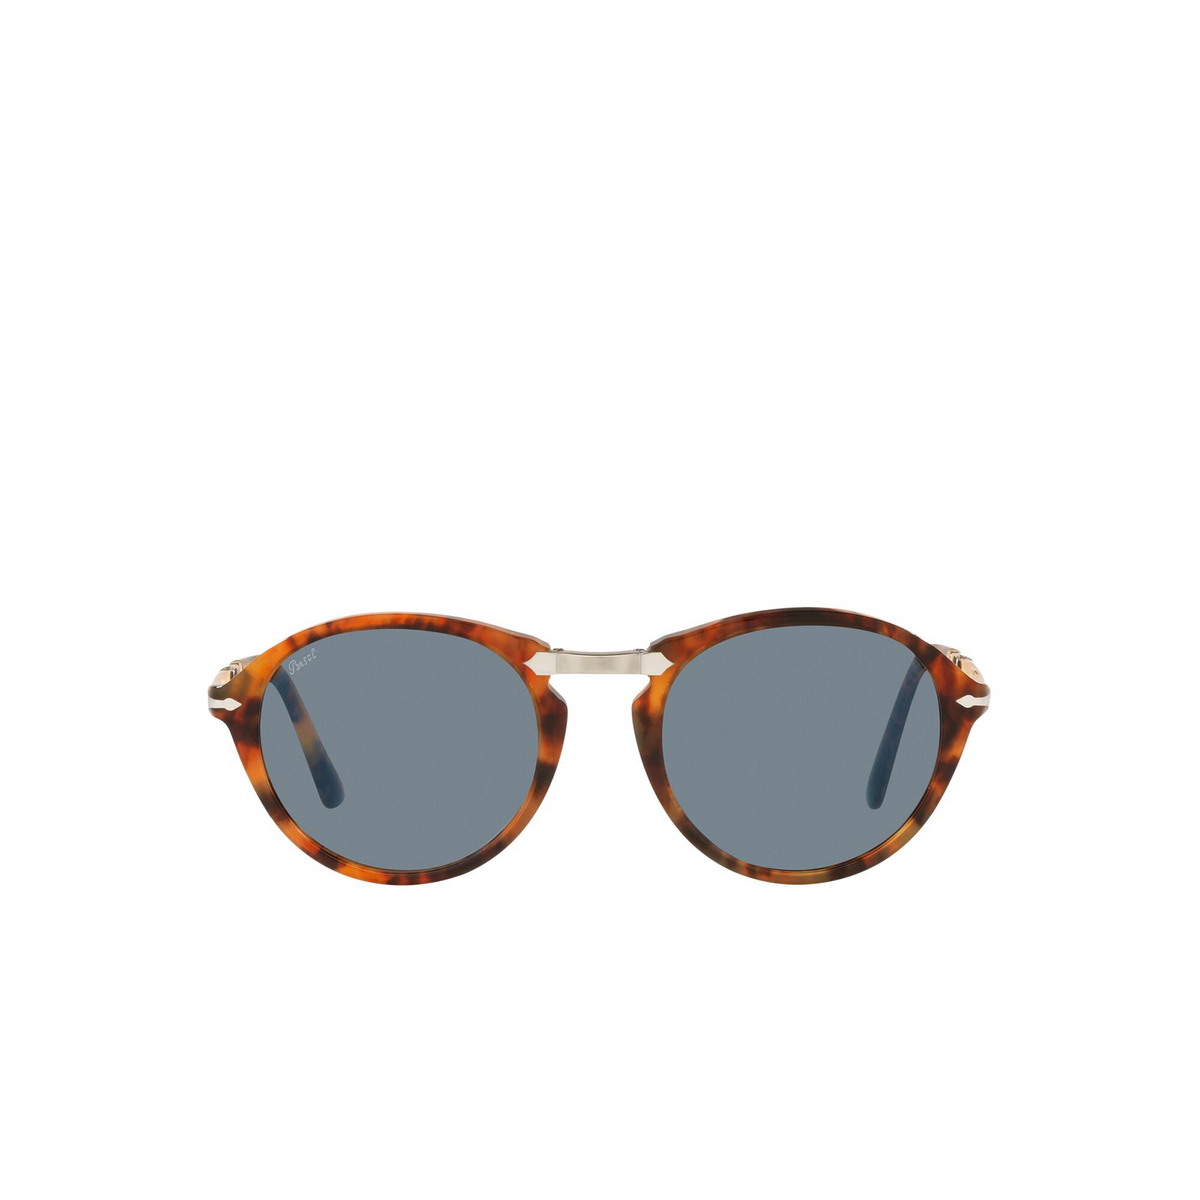 Persol® Round Sunglasses: PO3274S color Caffe 108/56 - front view.